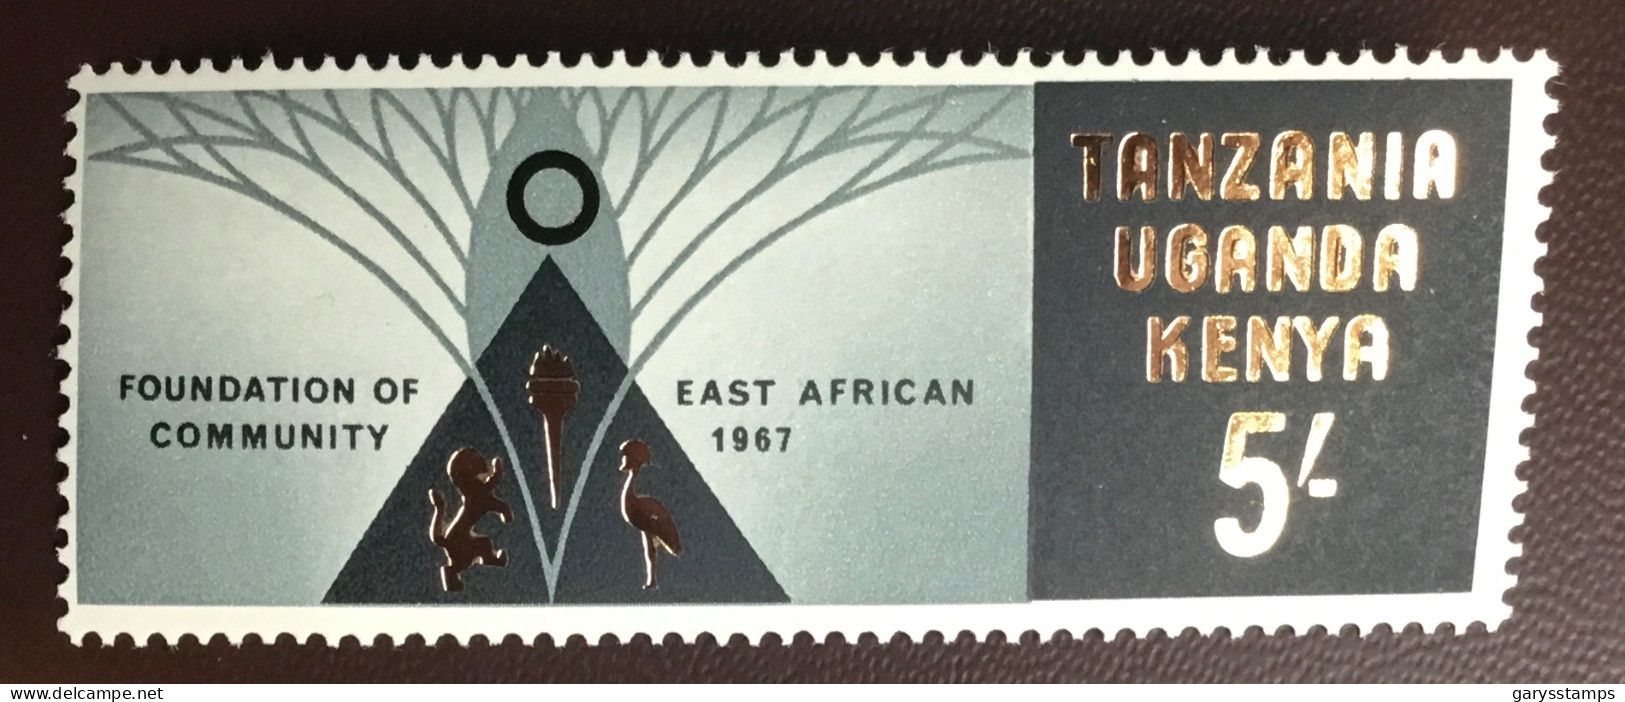 Kenya Uganda Tanzania 1967 East African Community MNH - Kenya, Uganda & Tanzania